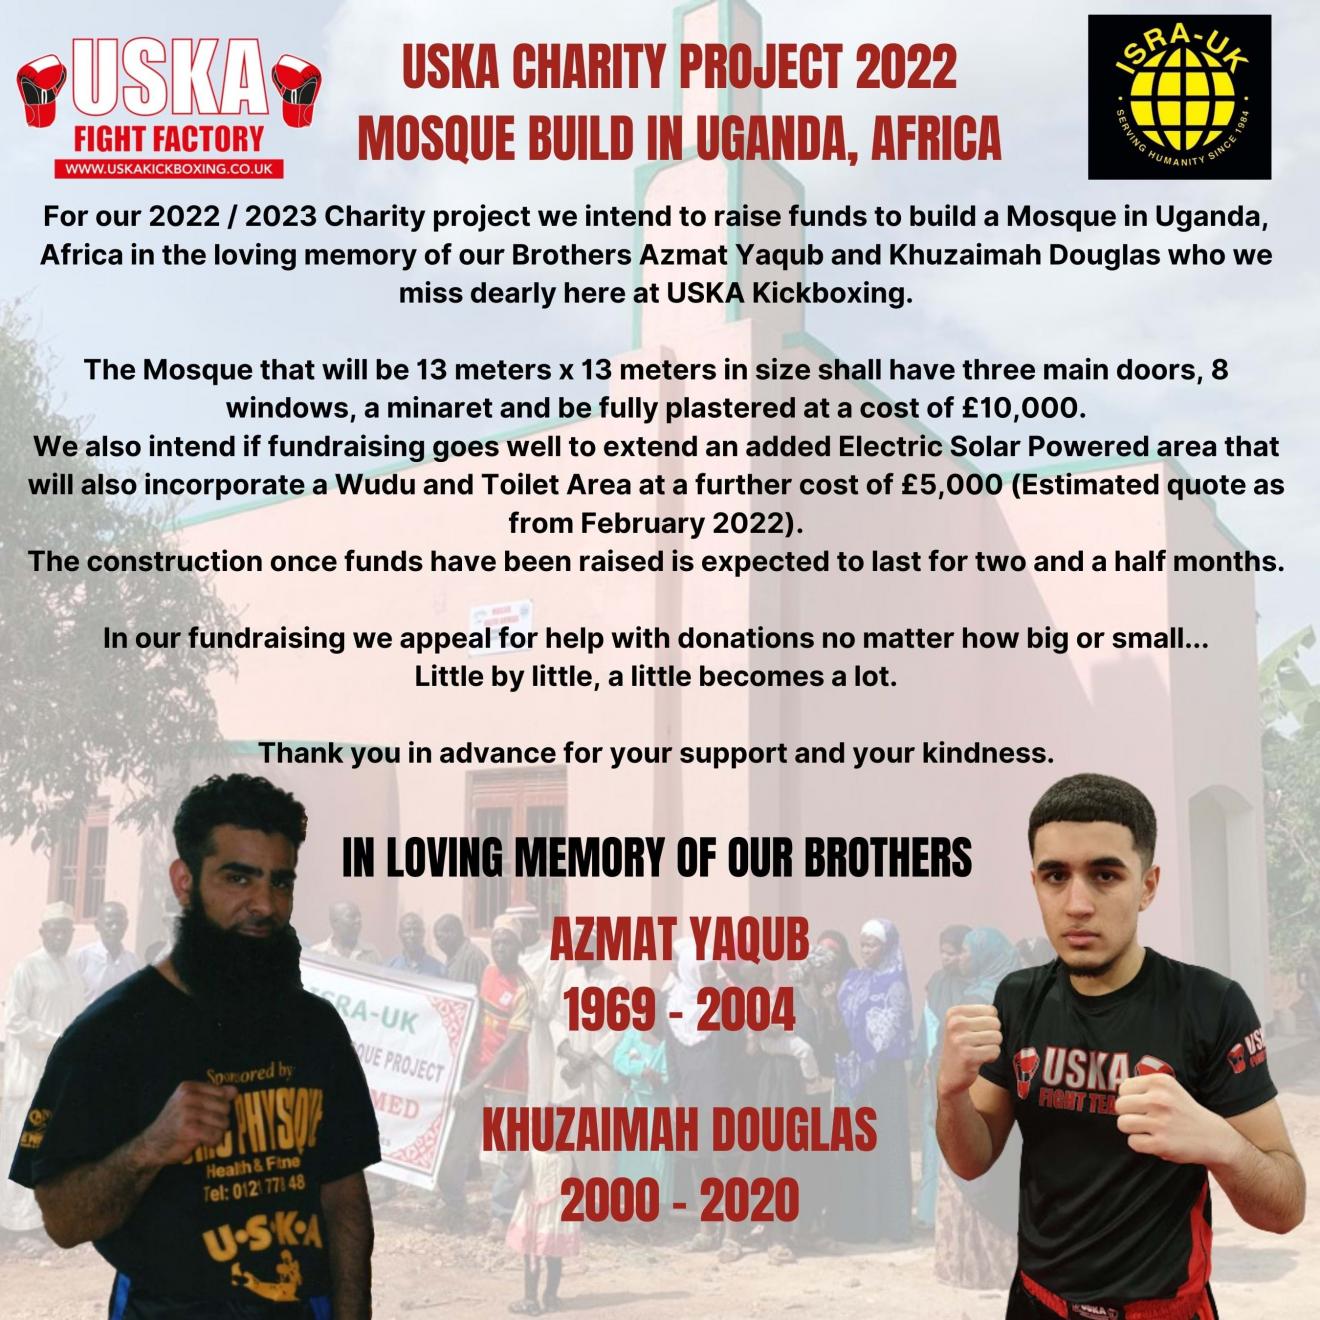 USKA Charity Project 2022 / 2023